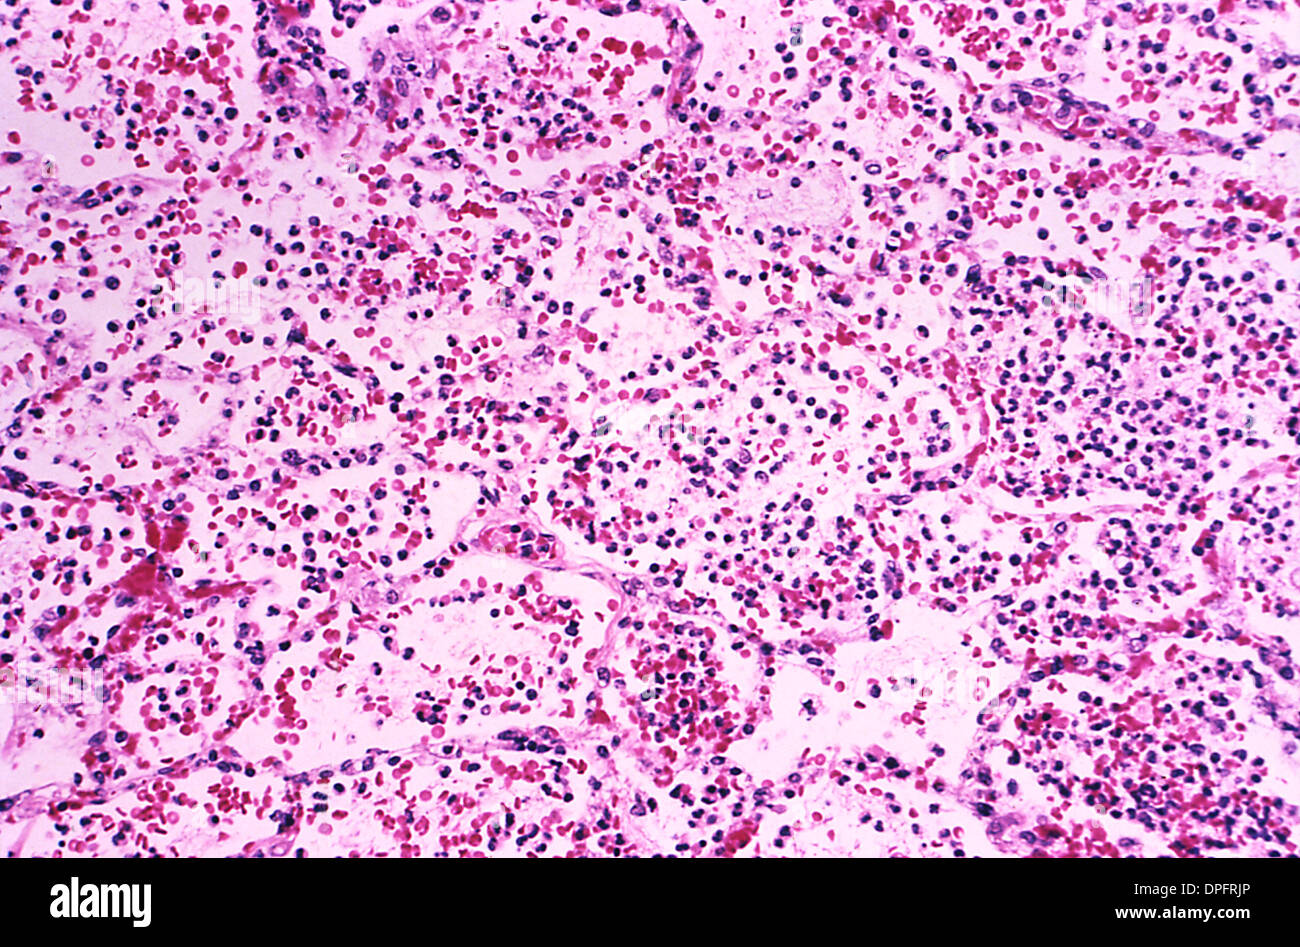 lung tissue in a case of human plague pneumonia Stock Photo